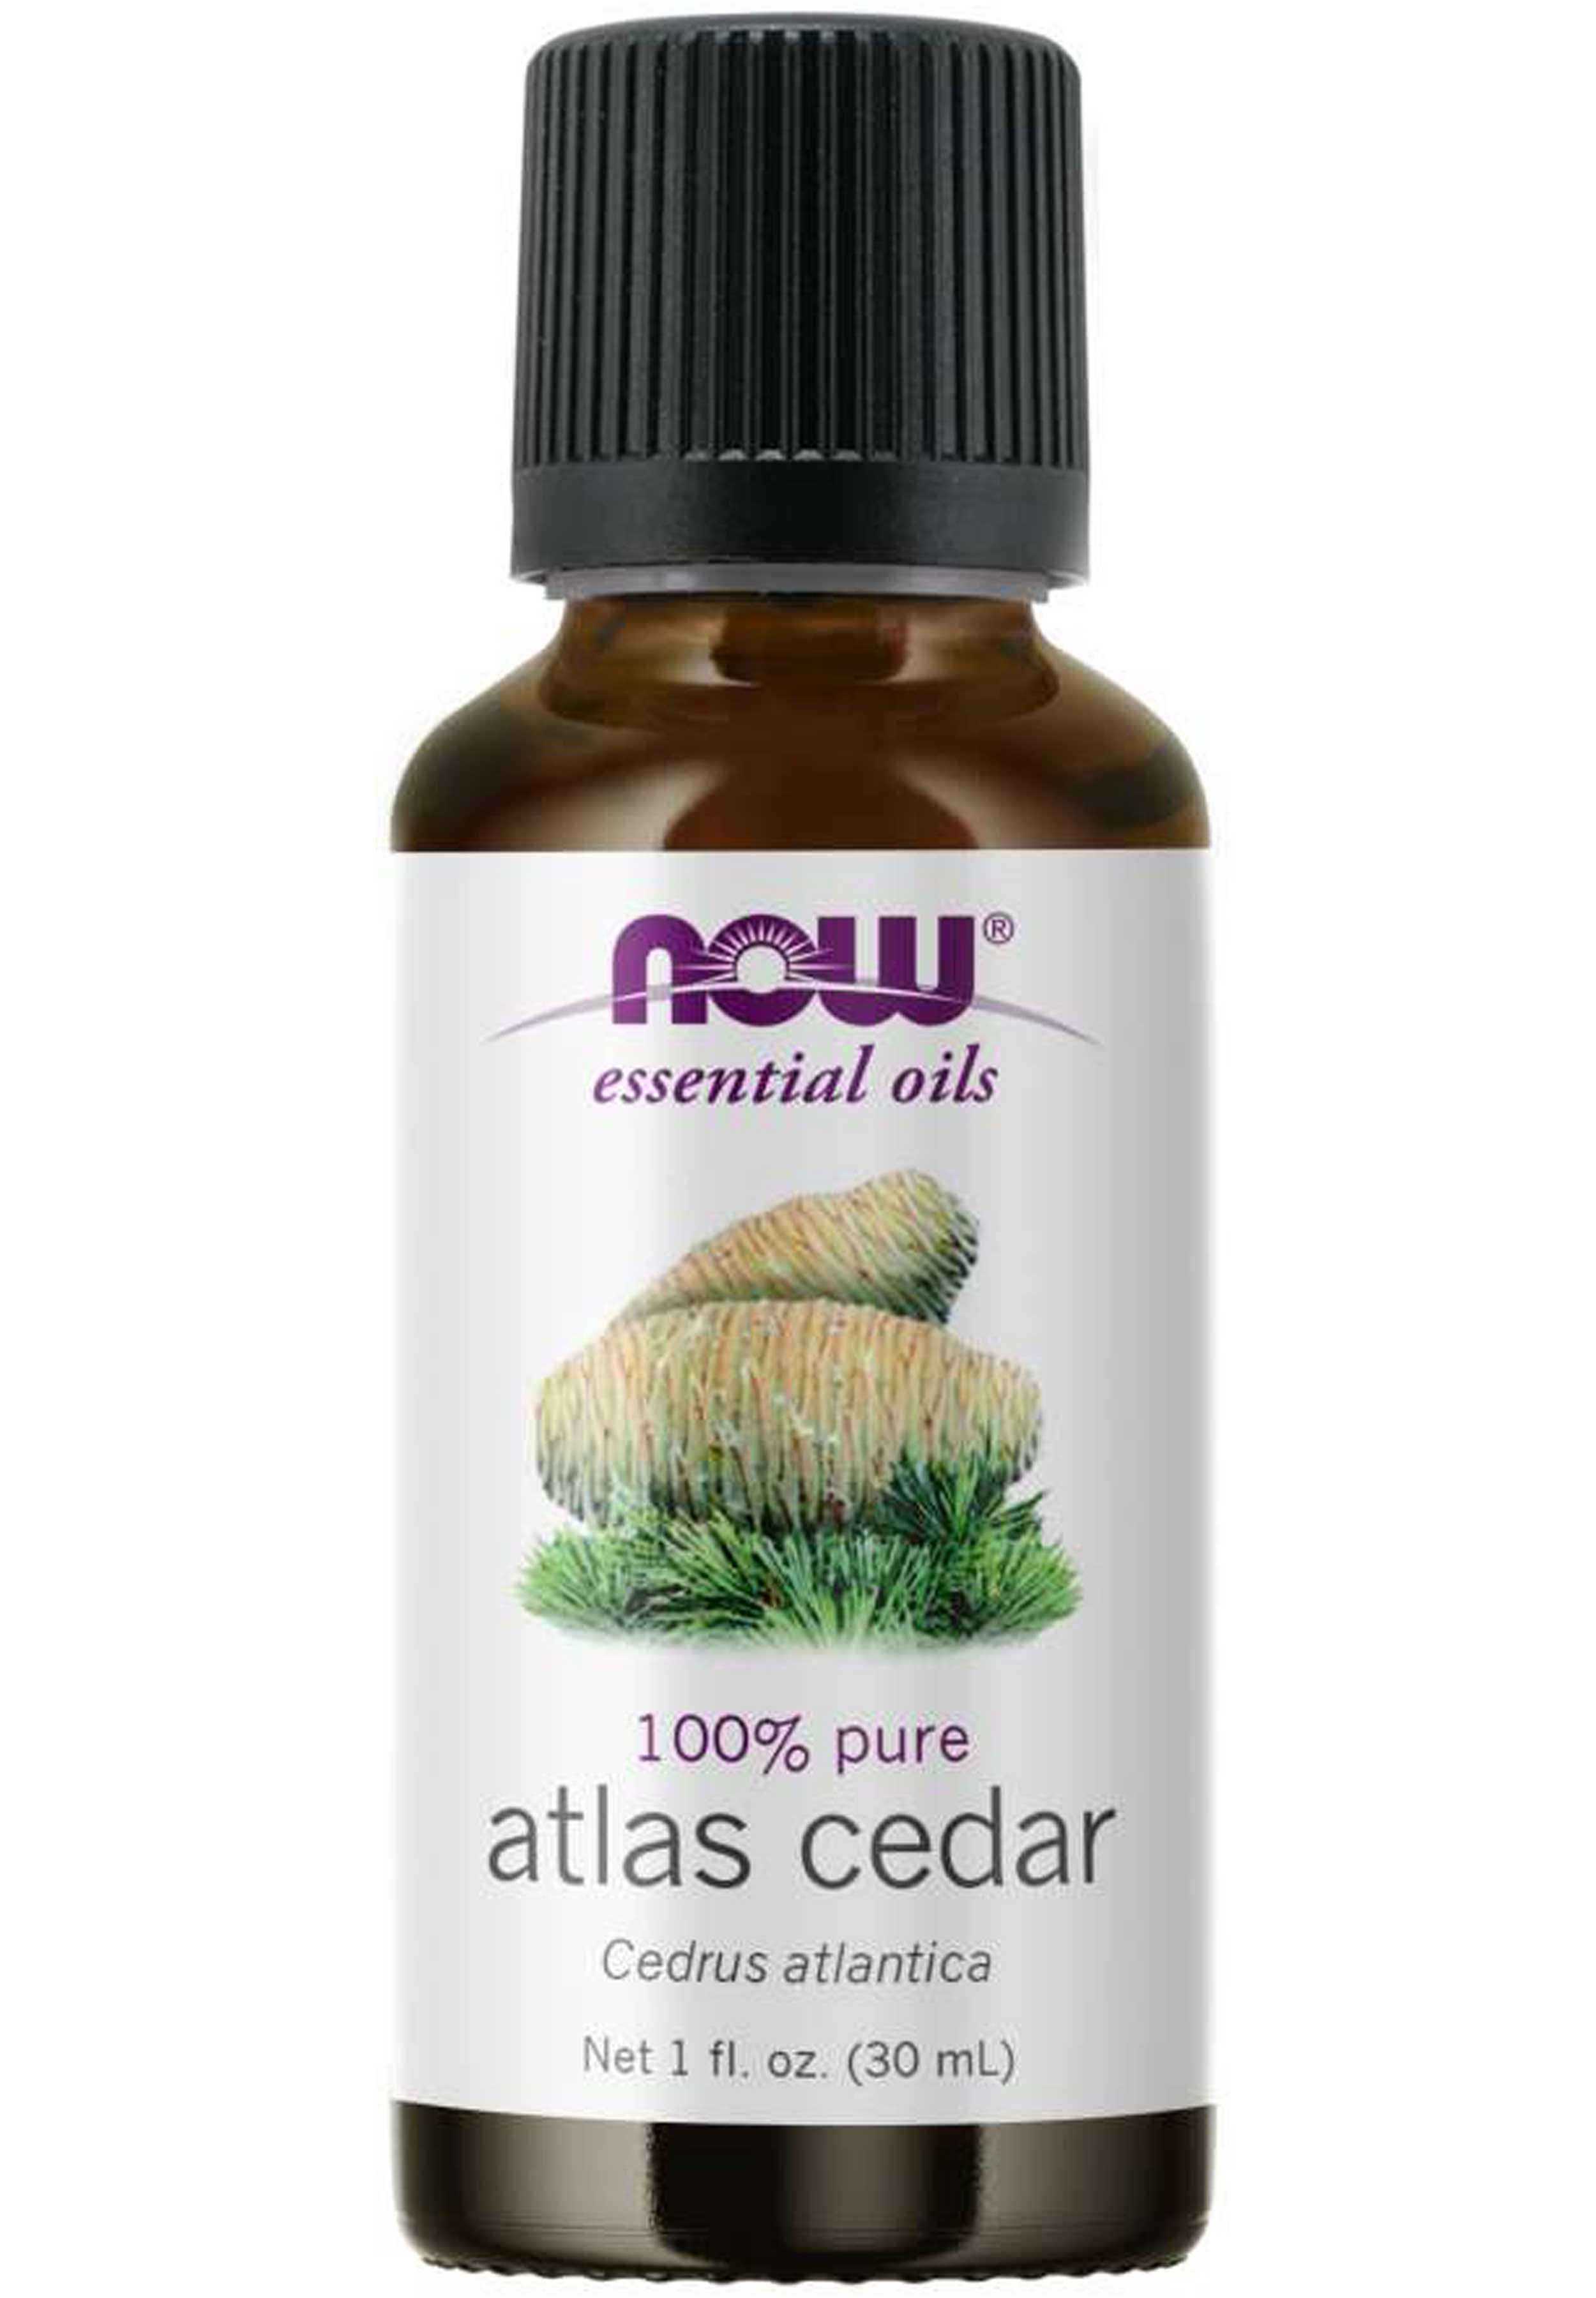 NOW Essential Oils Atlas Cedar Oil, Pure